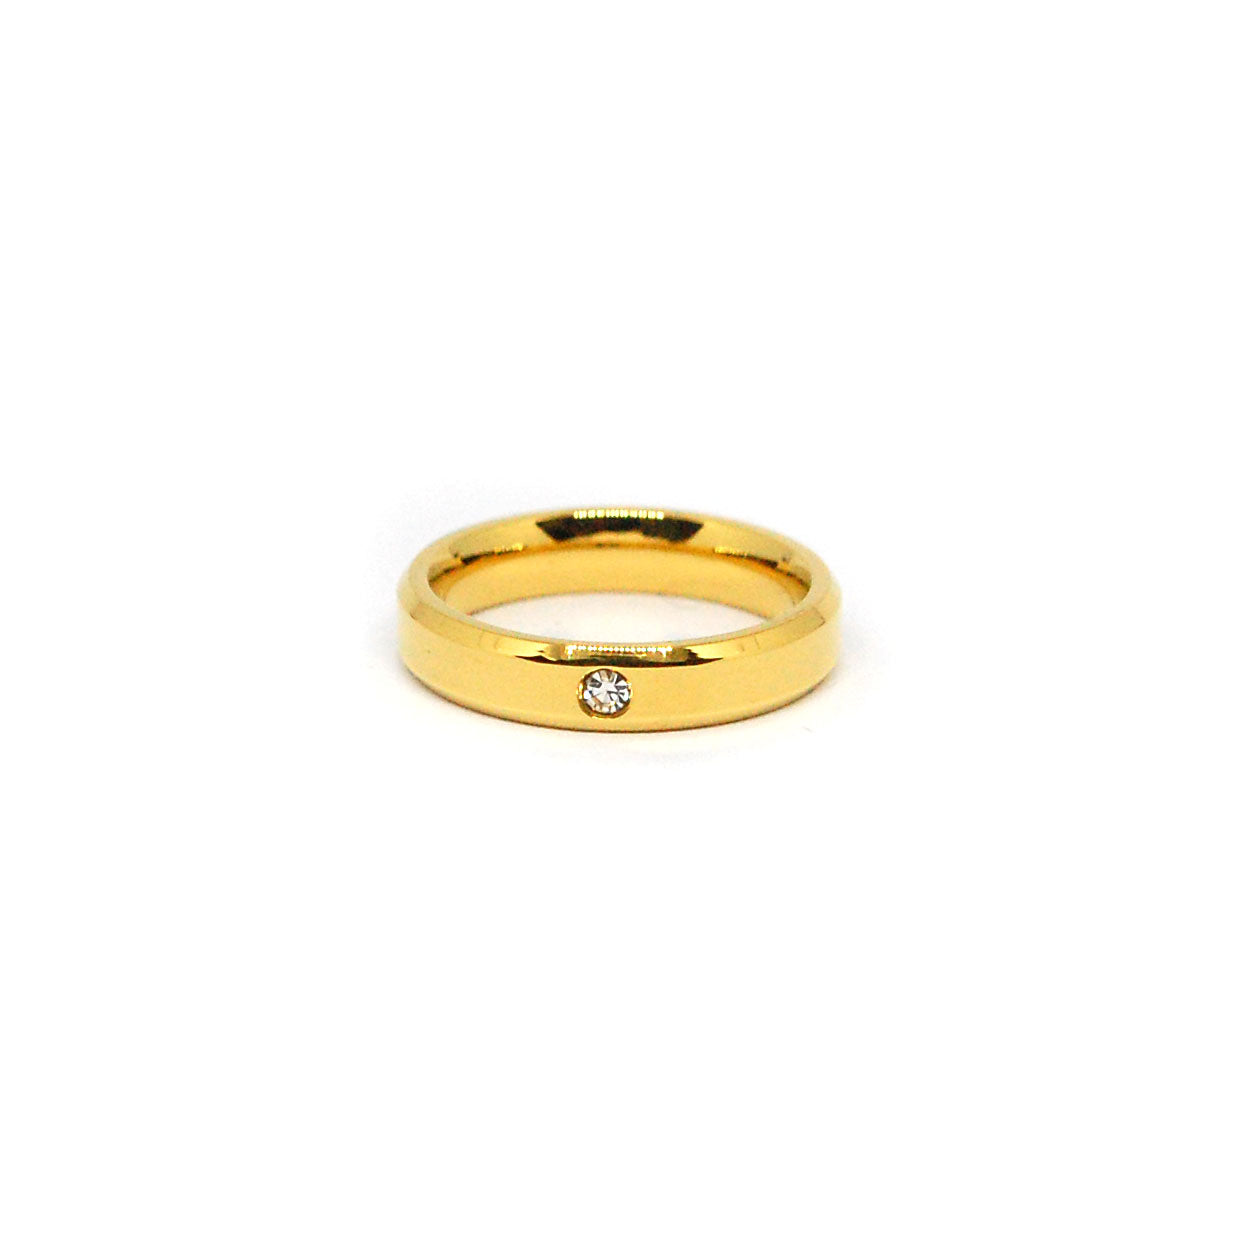 ESR 7862: Goldie IPG Glossy 4mm Flat CF Ring w/ 1 Cz Ctr